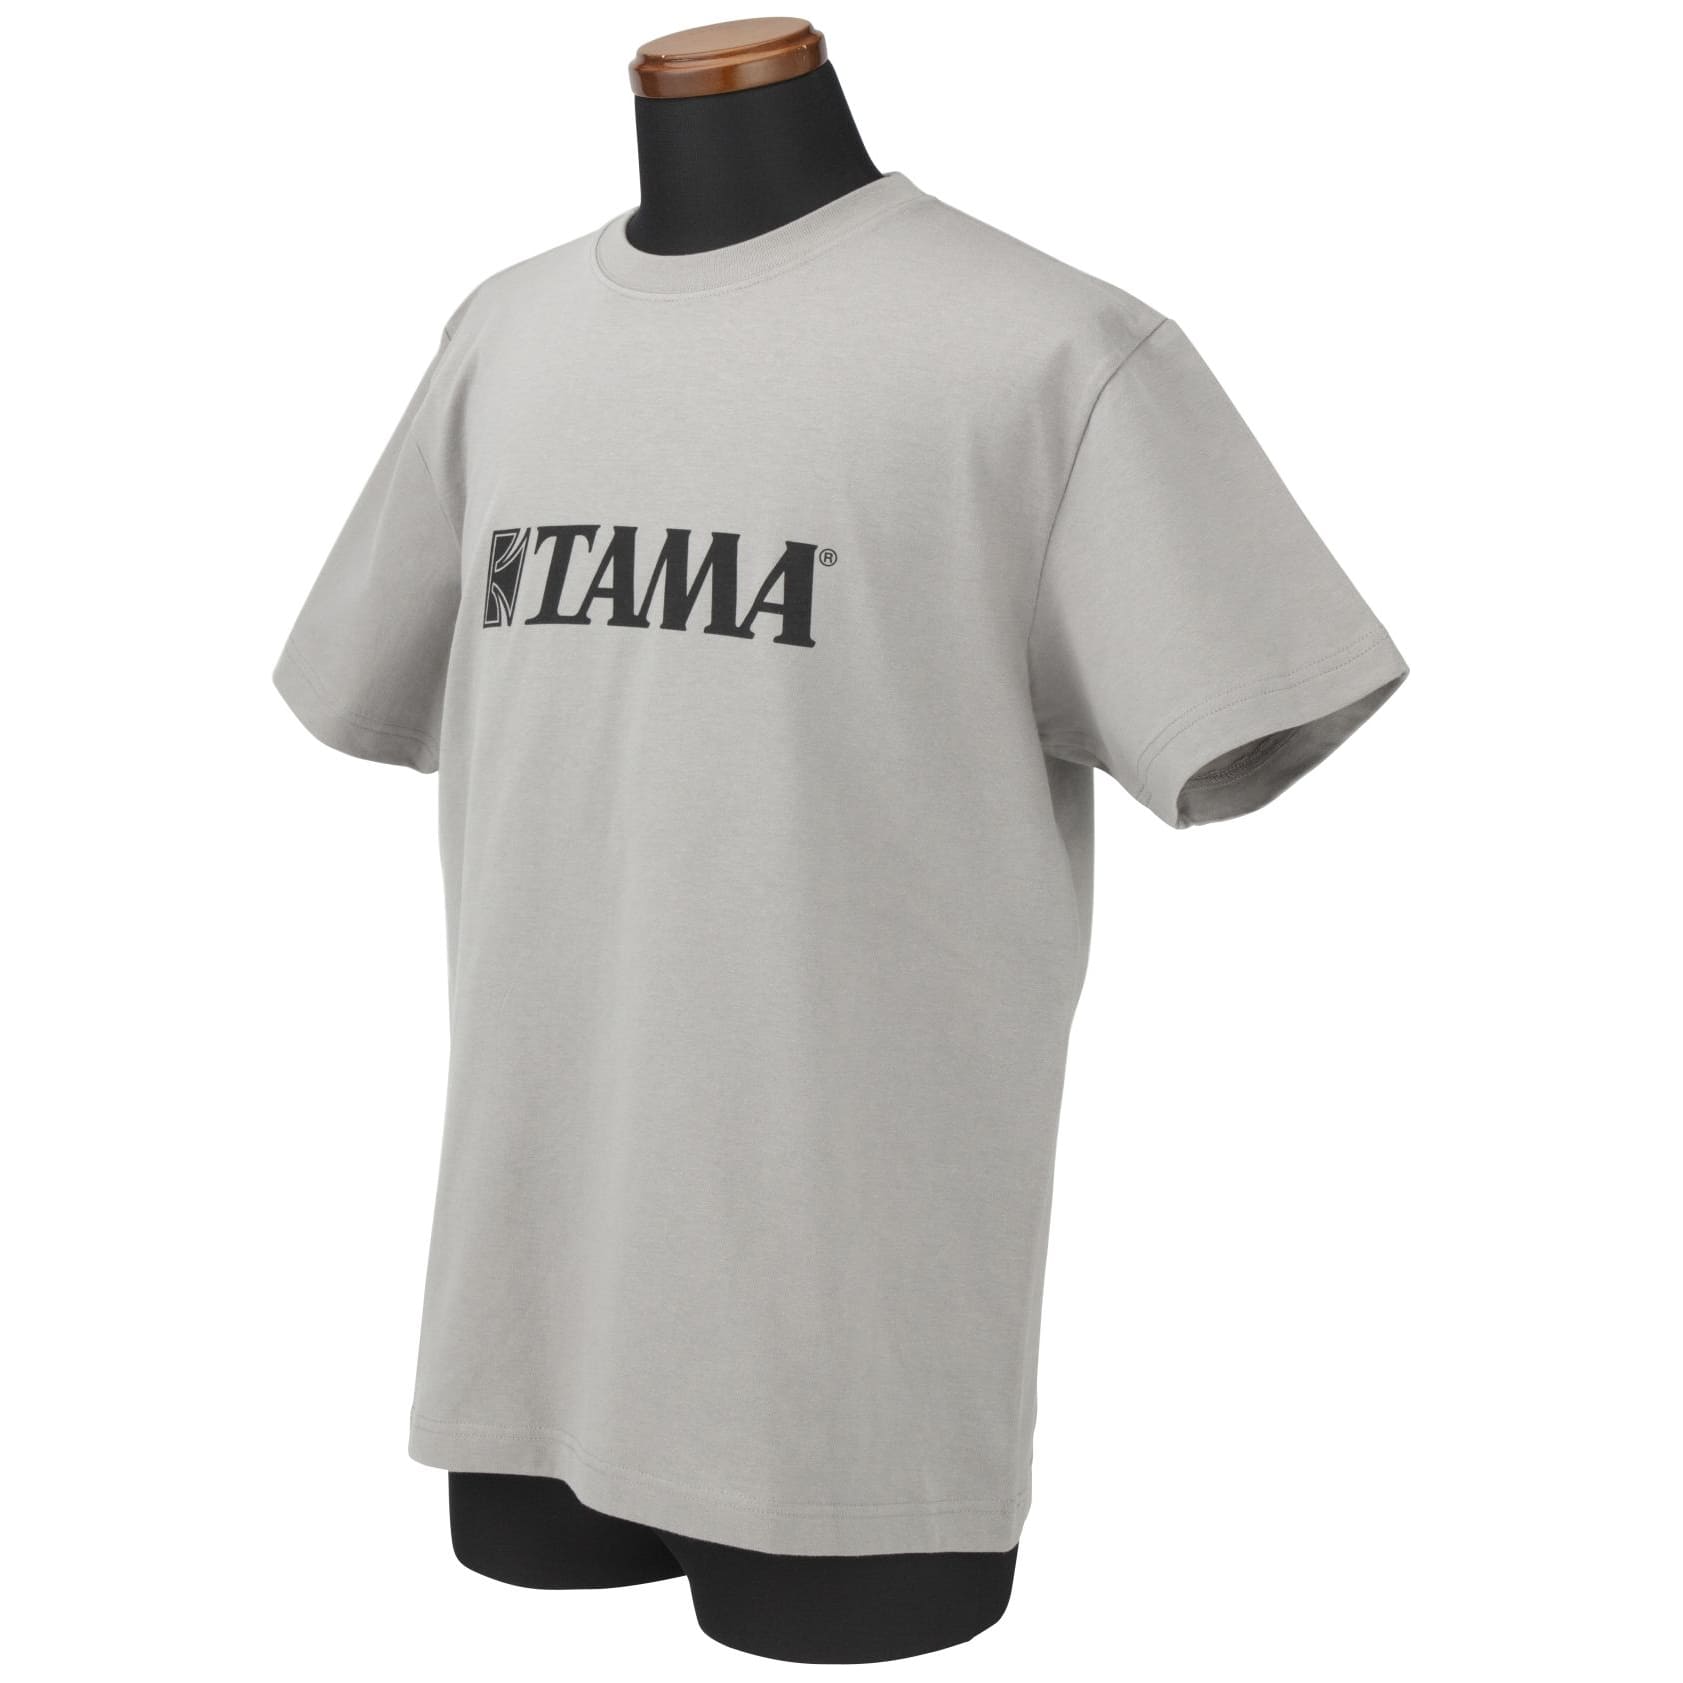 Tama TAMT005S T-Shirt Black Logo - grau - S